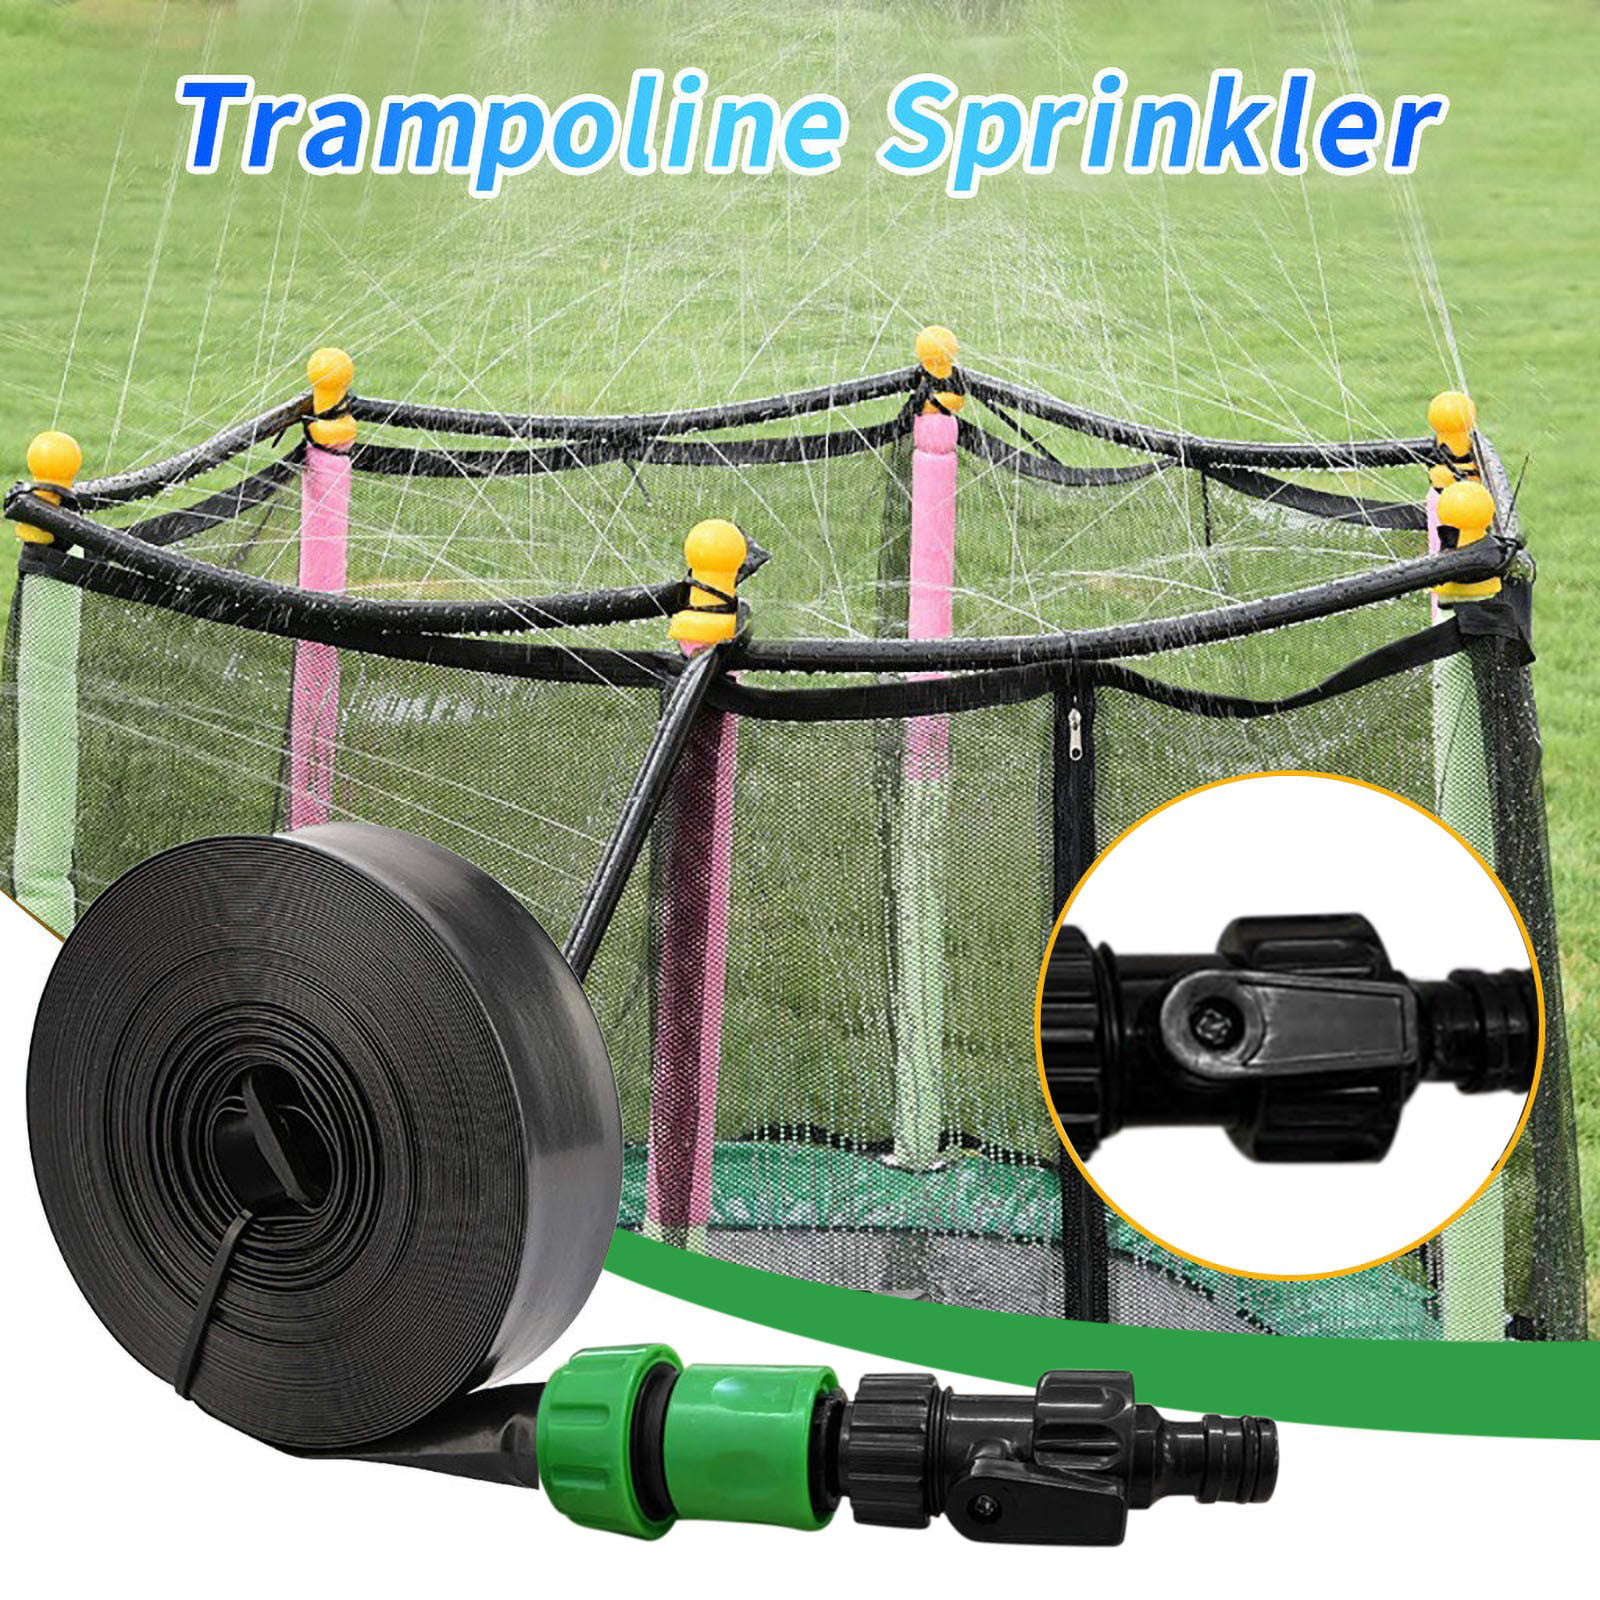 Bzoosio Trampoline Waterpark Sprinkler Best Outdoor Summer Toys For Restaurant Bar Home